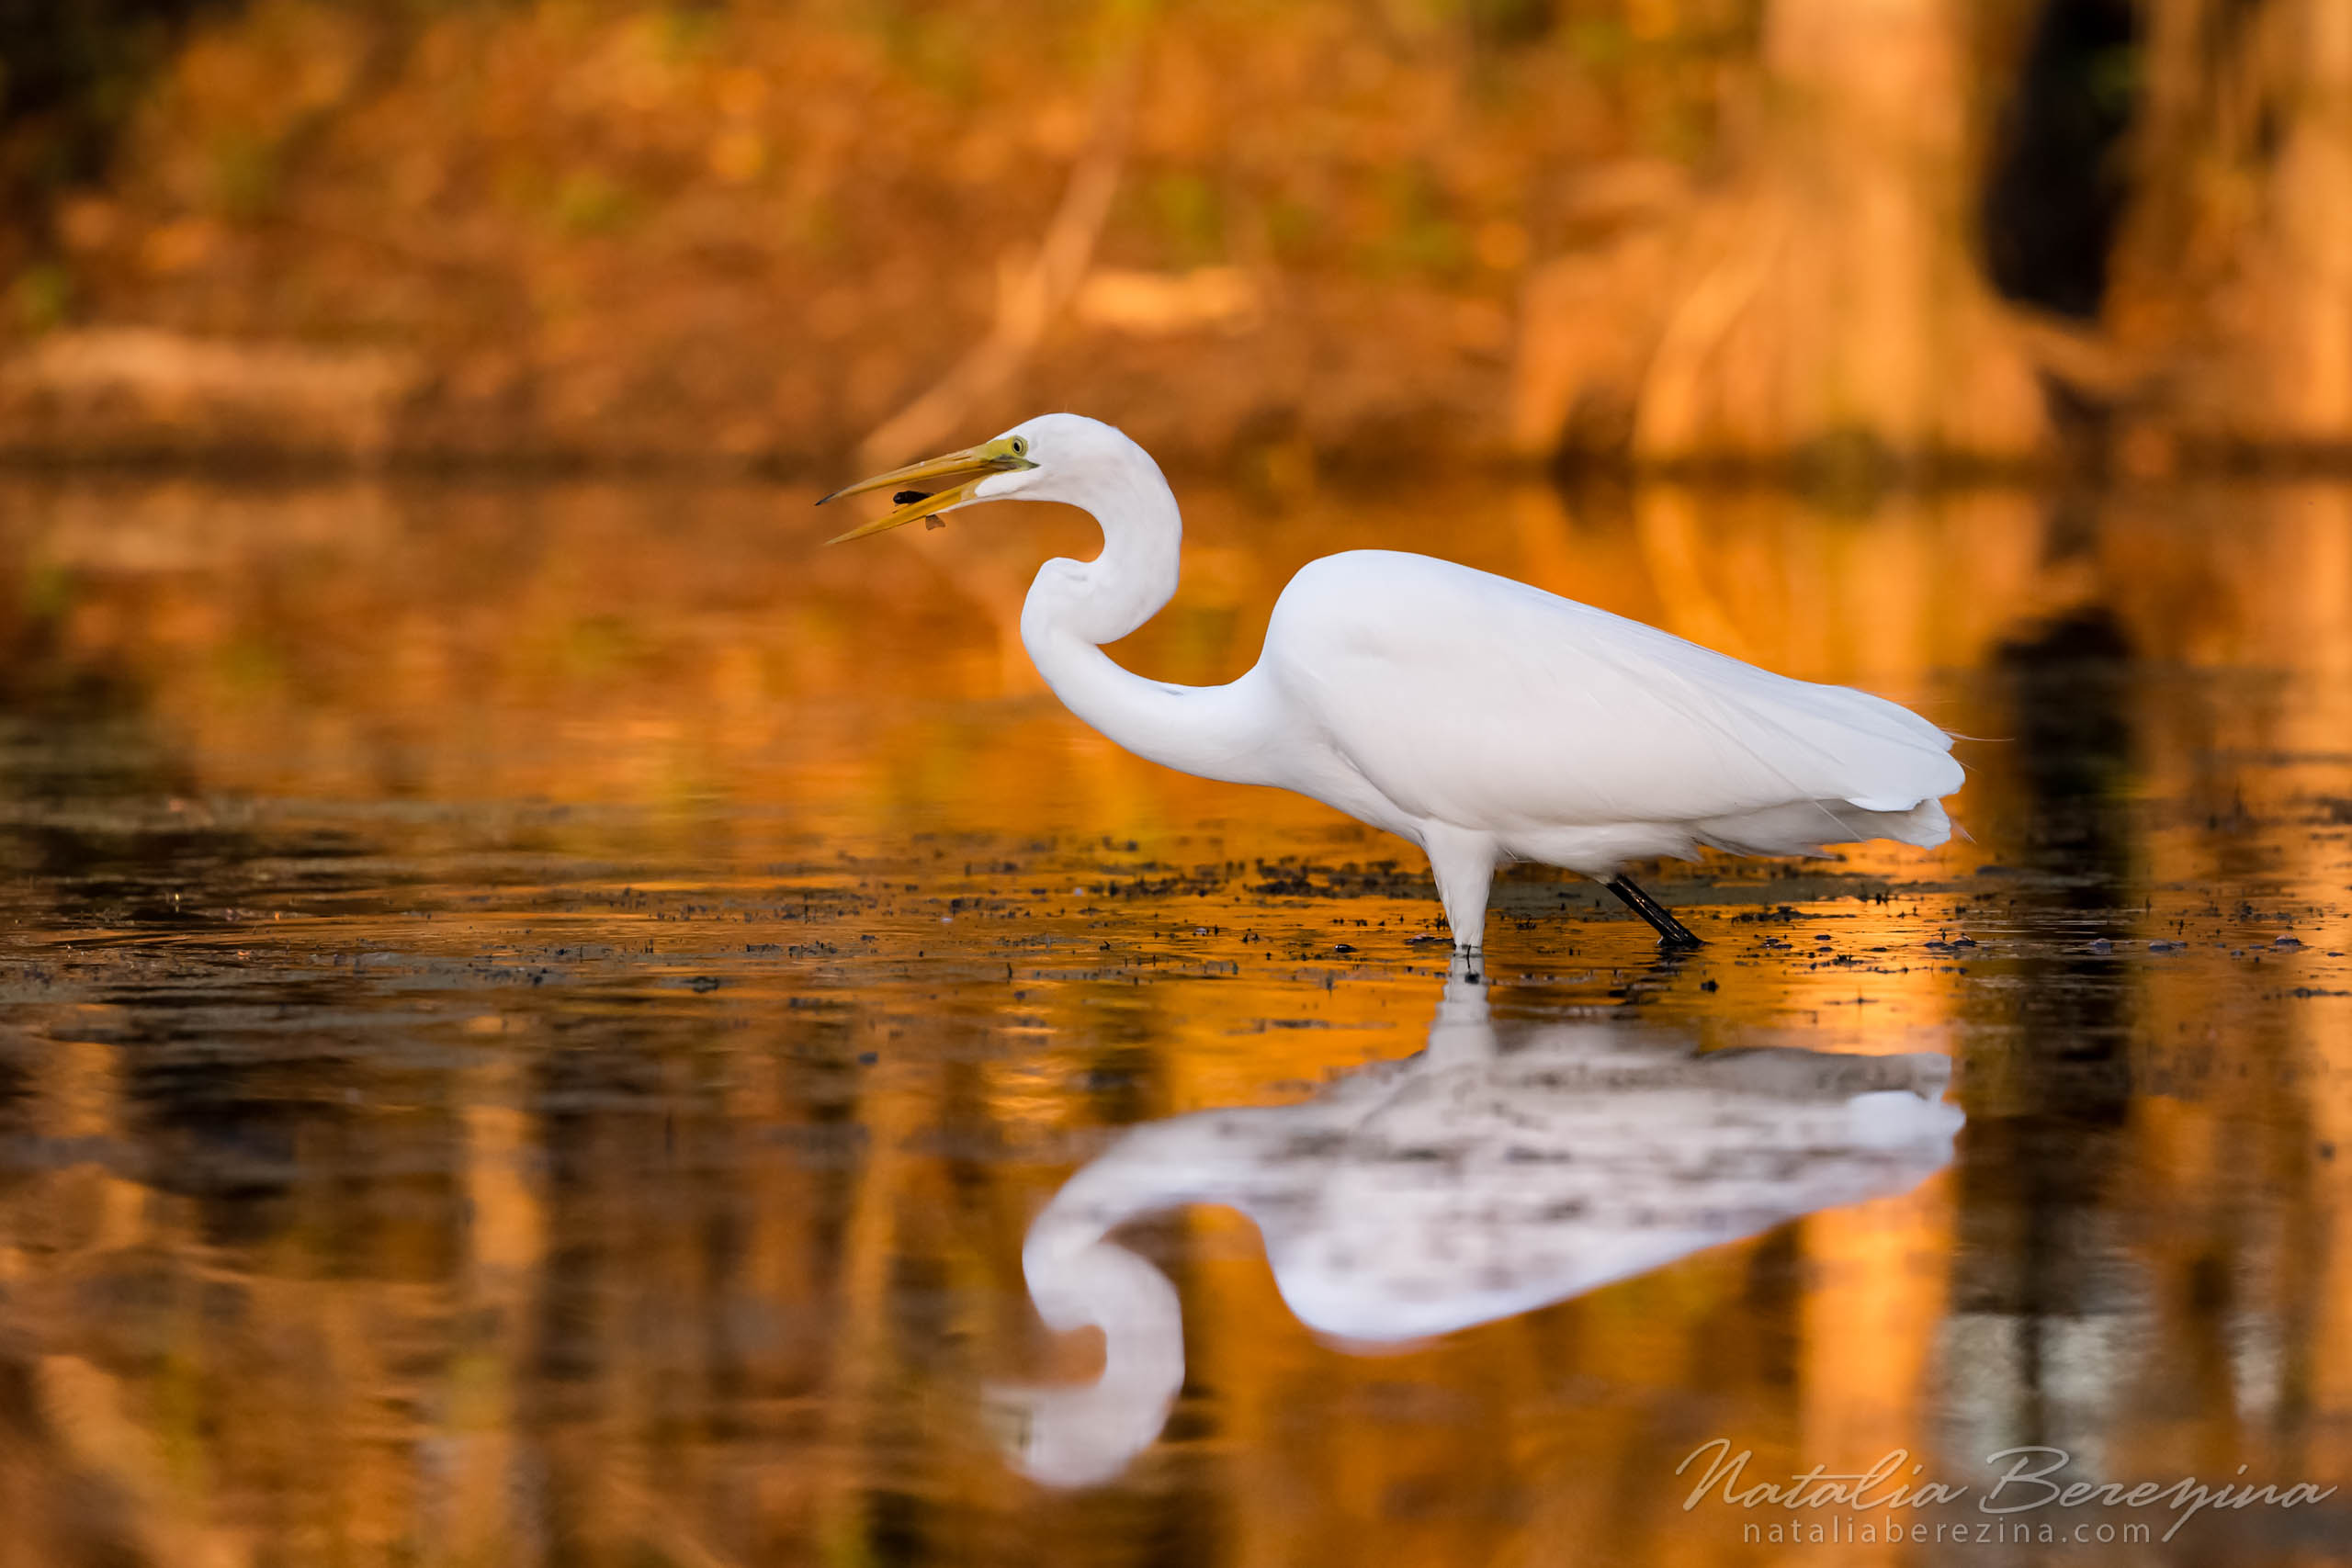 Louisiana, swaps, bird, wildlife, reflection, gold LO1-NBDK1U8522 - Cypress Swamps Wild Life, Louisiana, Texas, USA - Natalia Berezina Photography